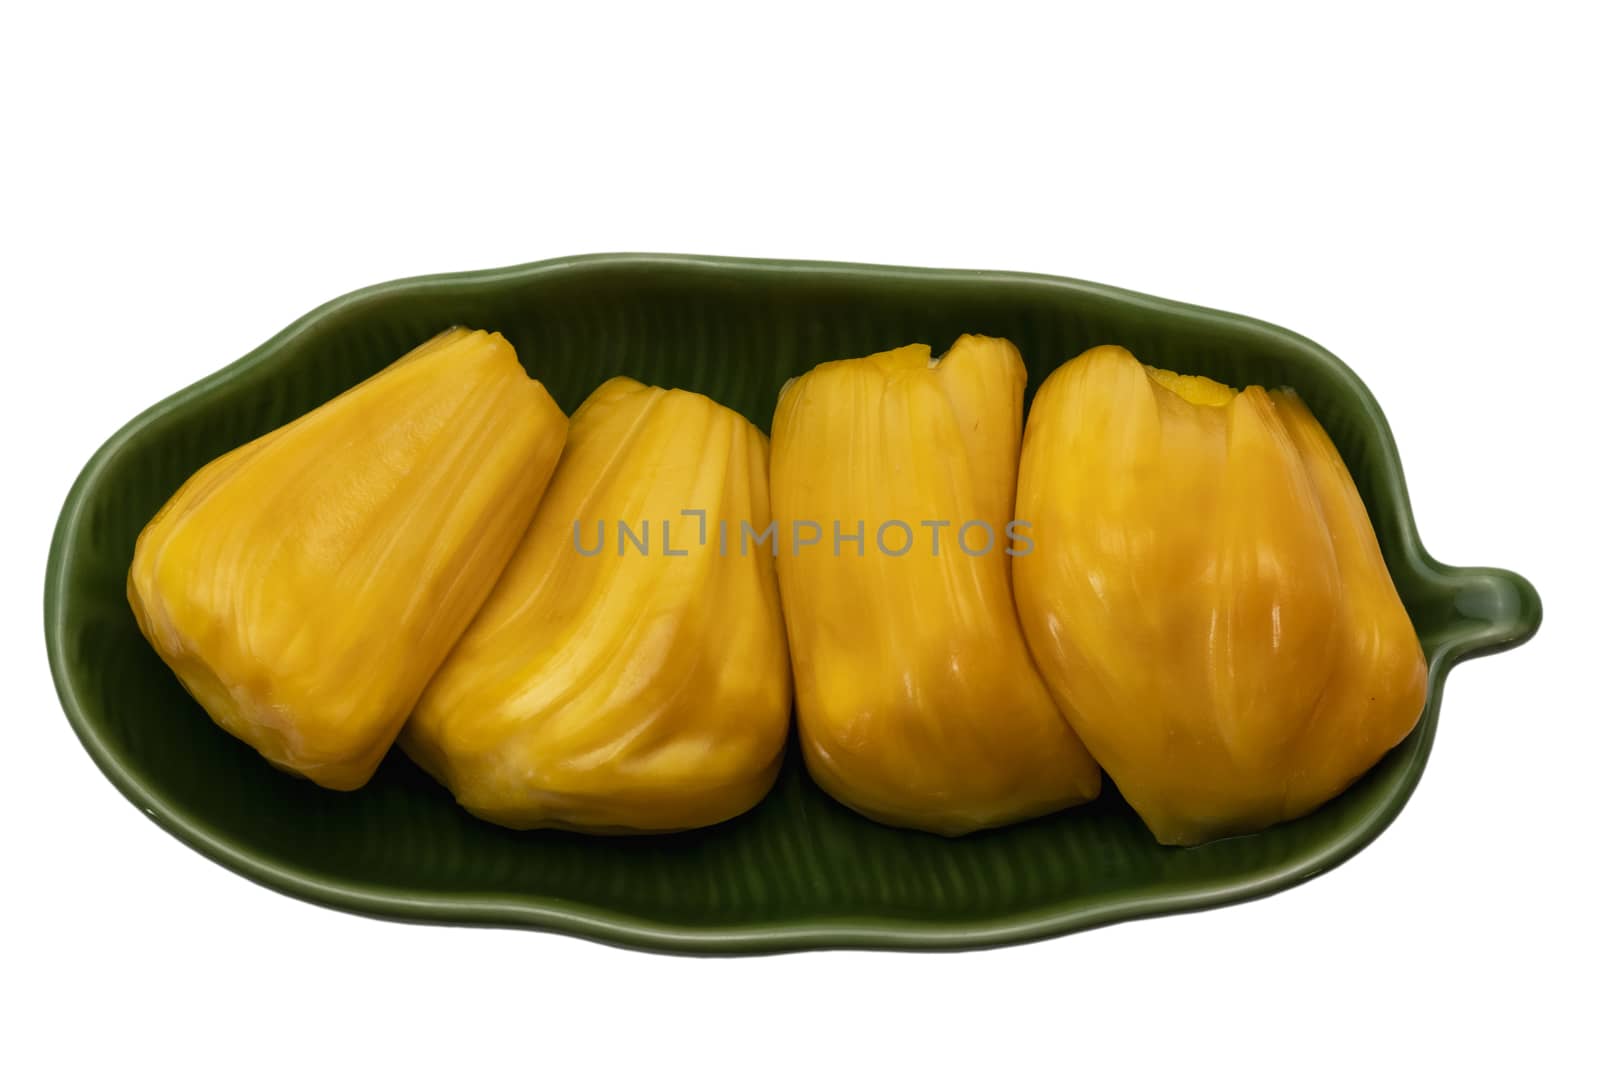 Jackfruit ripe yellow fruit flesh in green plate isolated on whi by Khankeawsanan